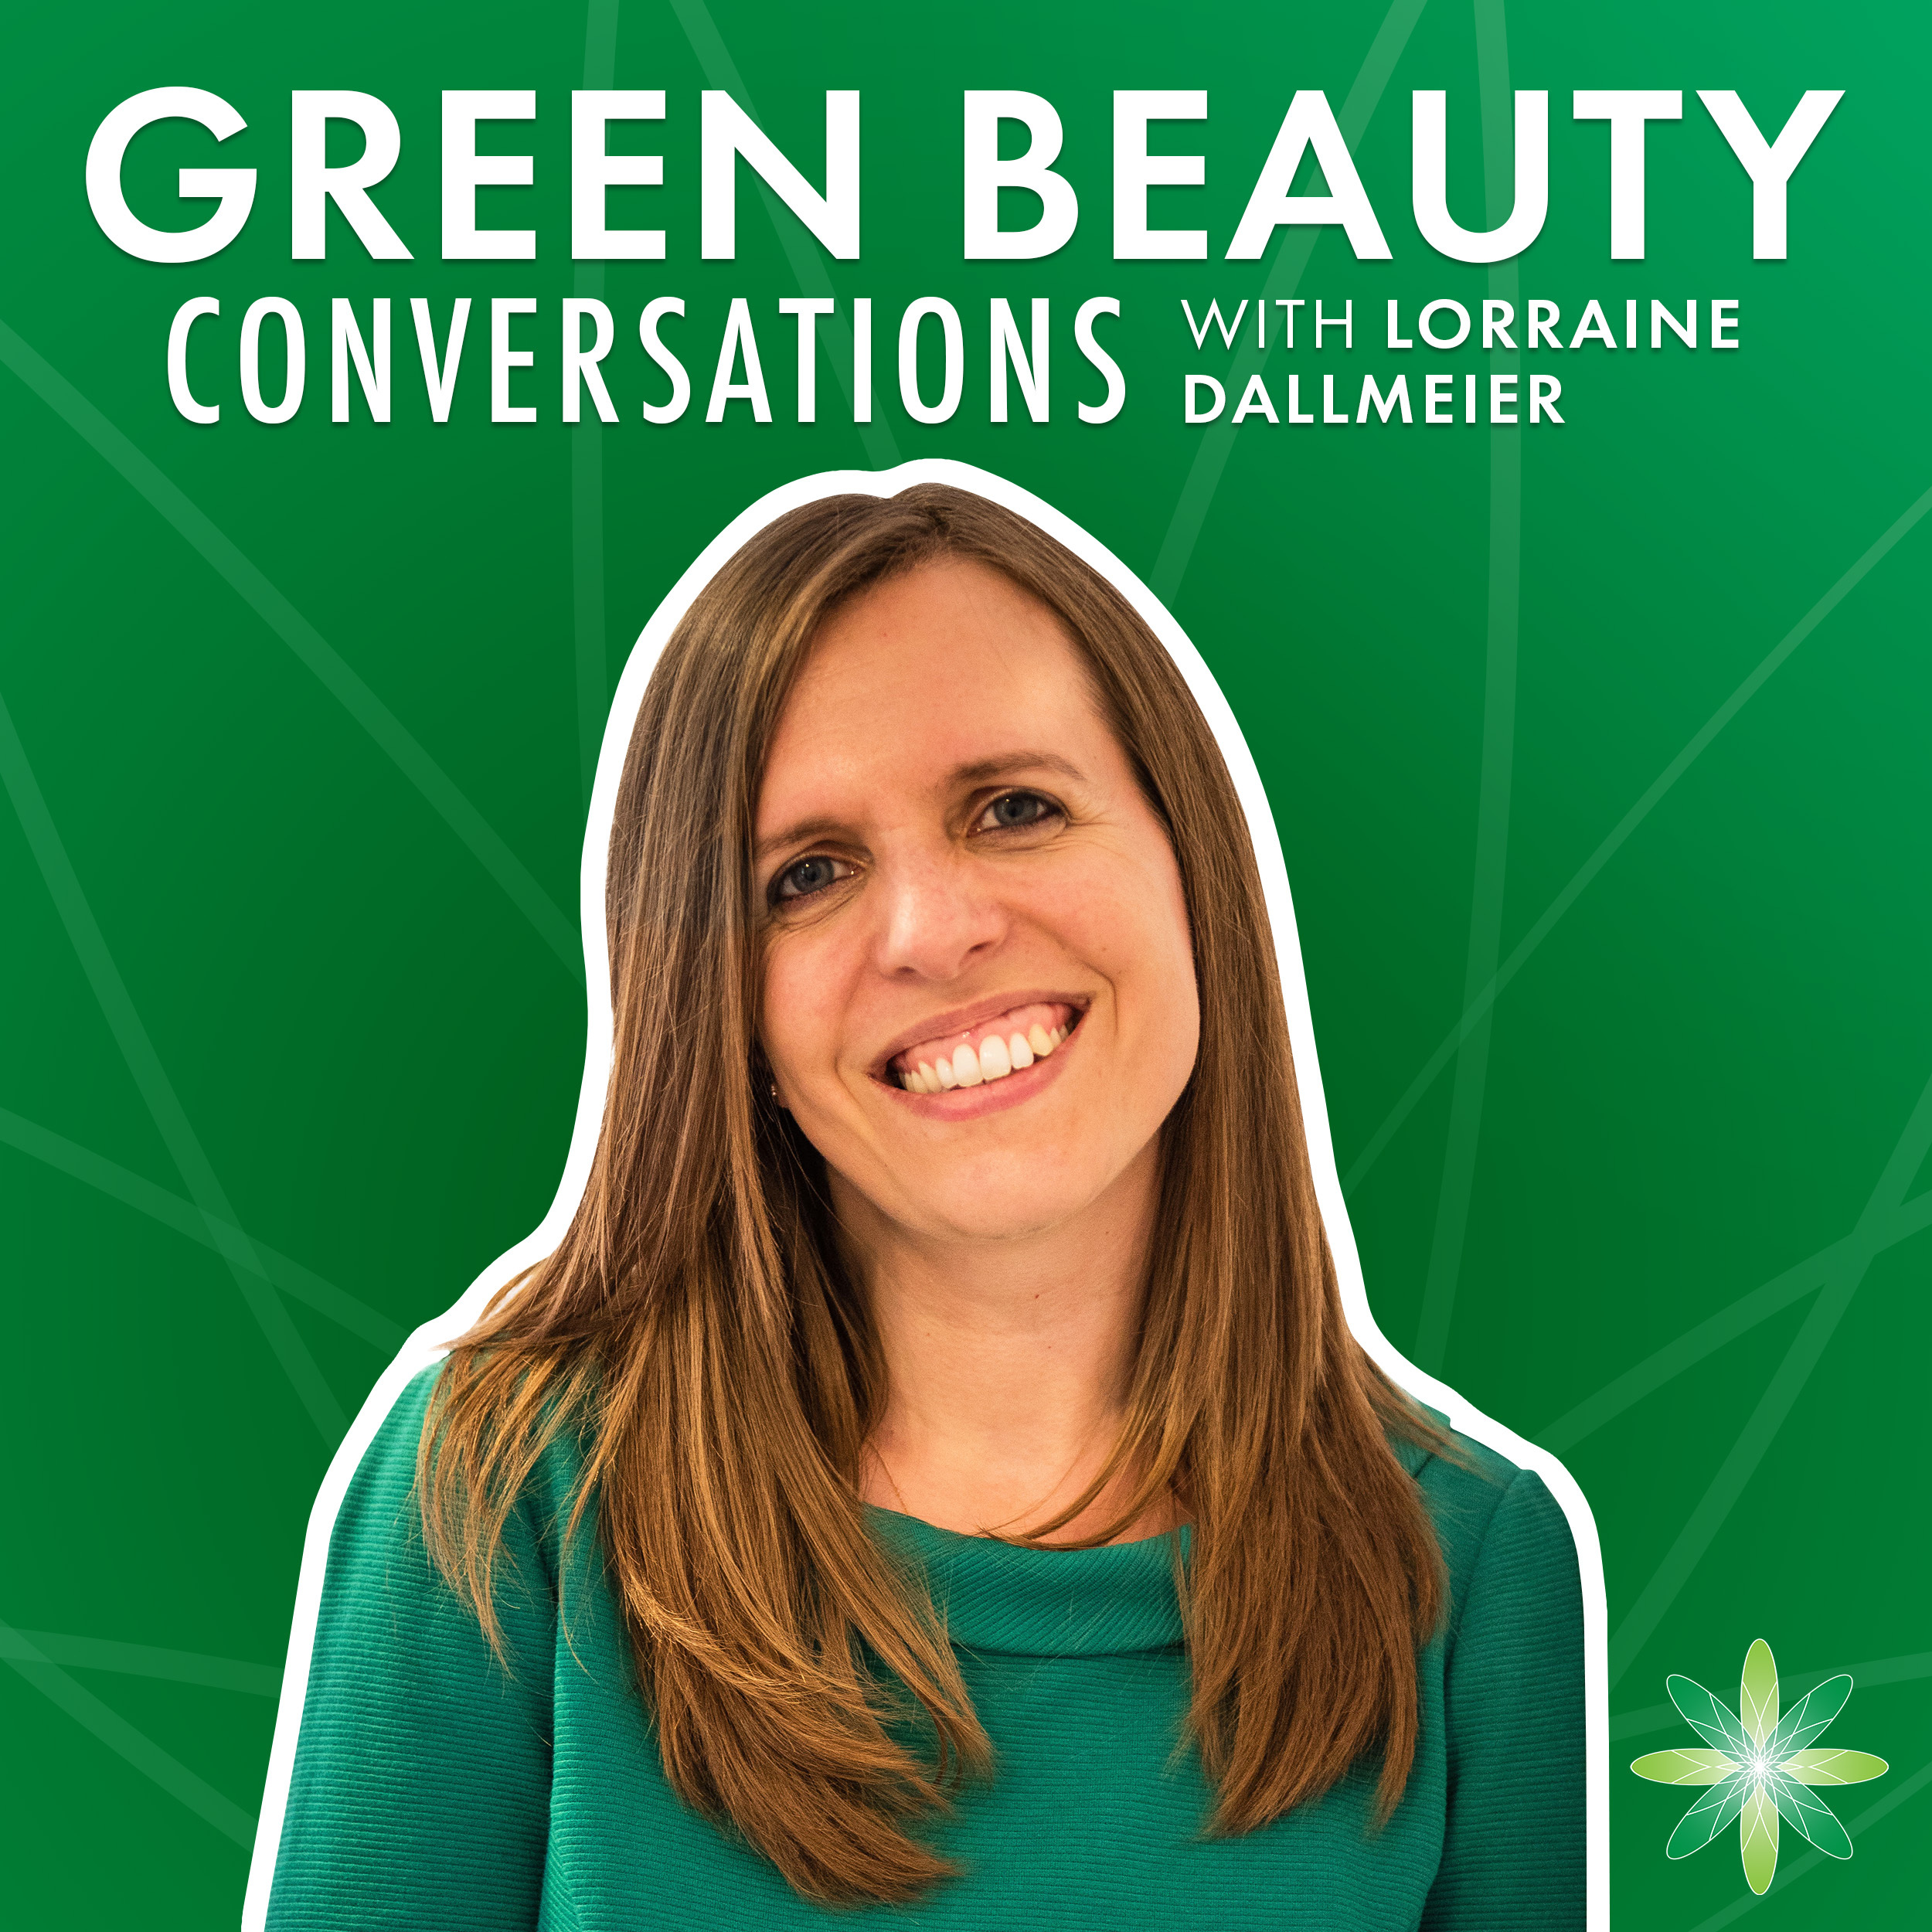 Green Beauty Conversations by Formula Botanica